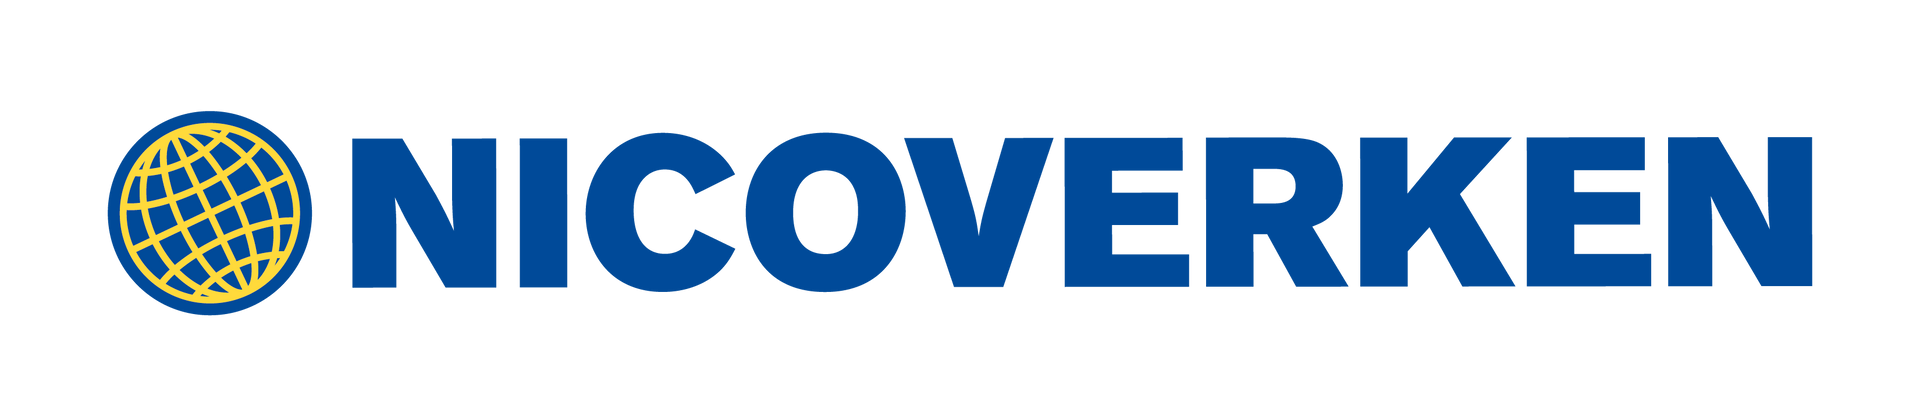 Nicoverken logo